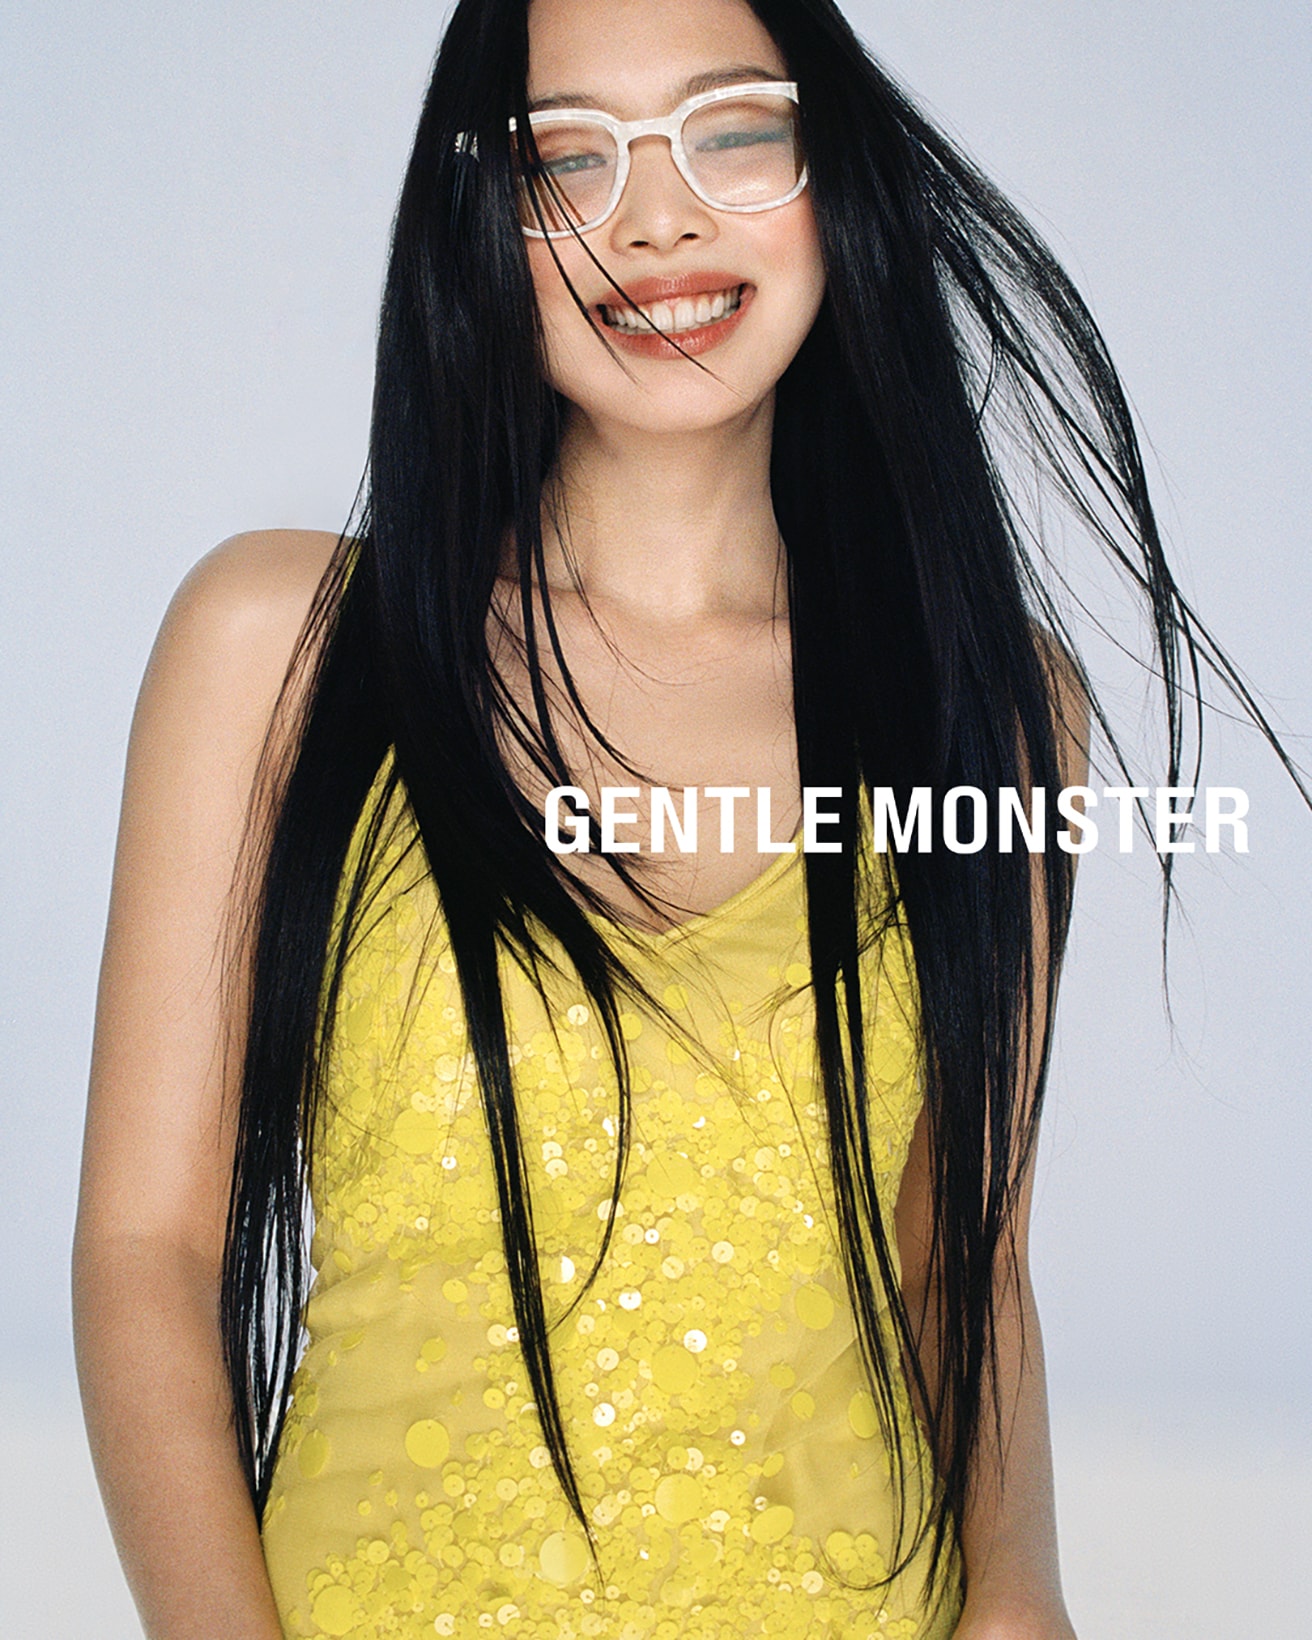 BLACKPINK Jennie Gentle Monster Eyewear Sunglasses Glasses Campaign Kpop